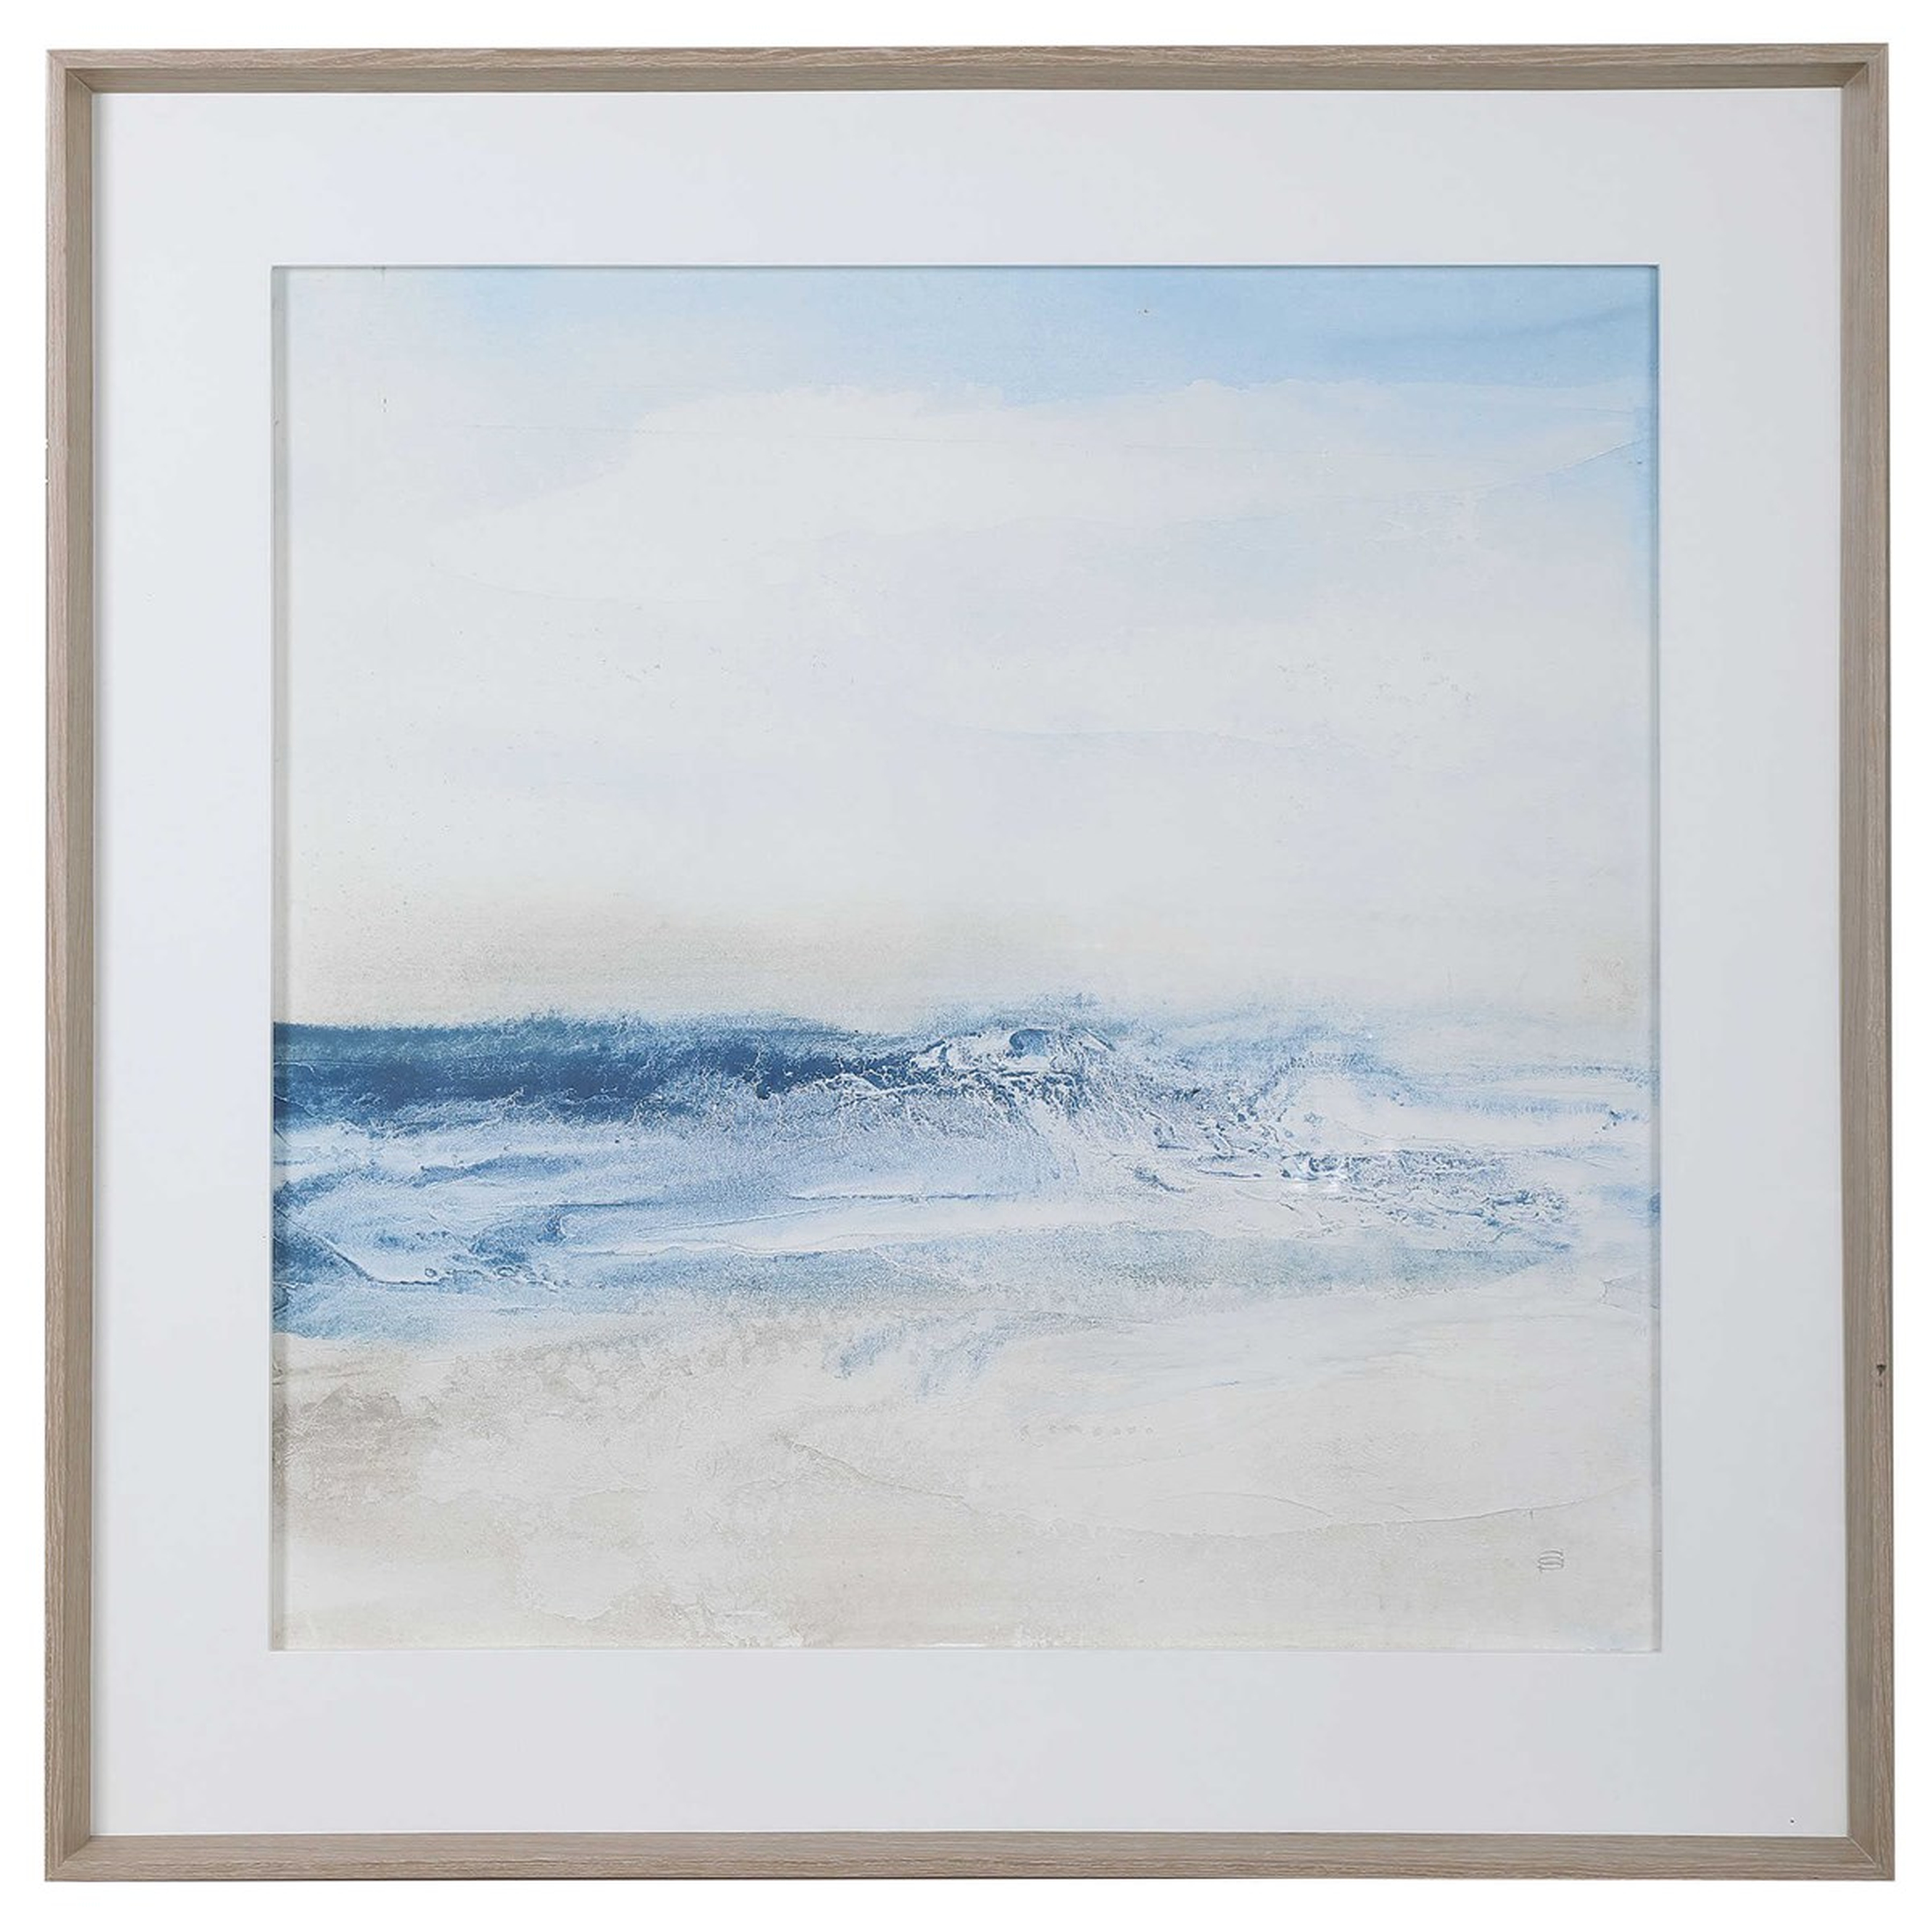 Surf & Sand Framed Print, 52" x 52" - Hudsonhill Foundry